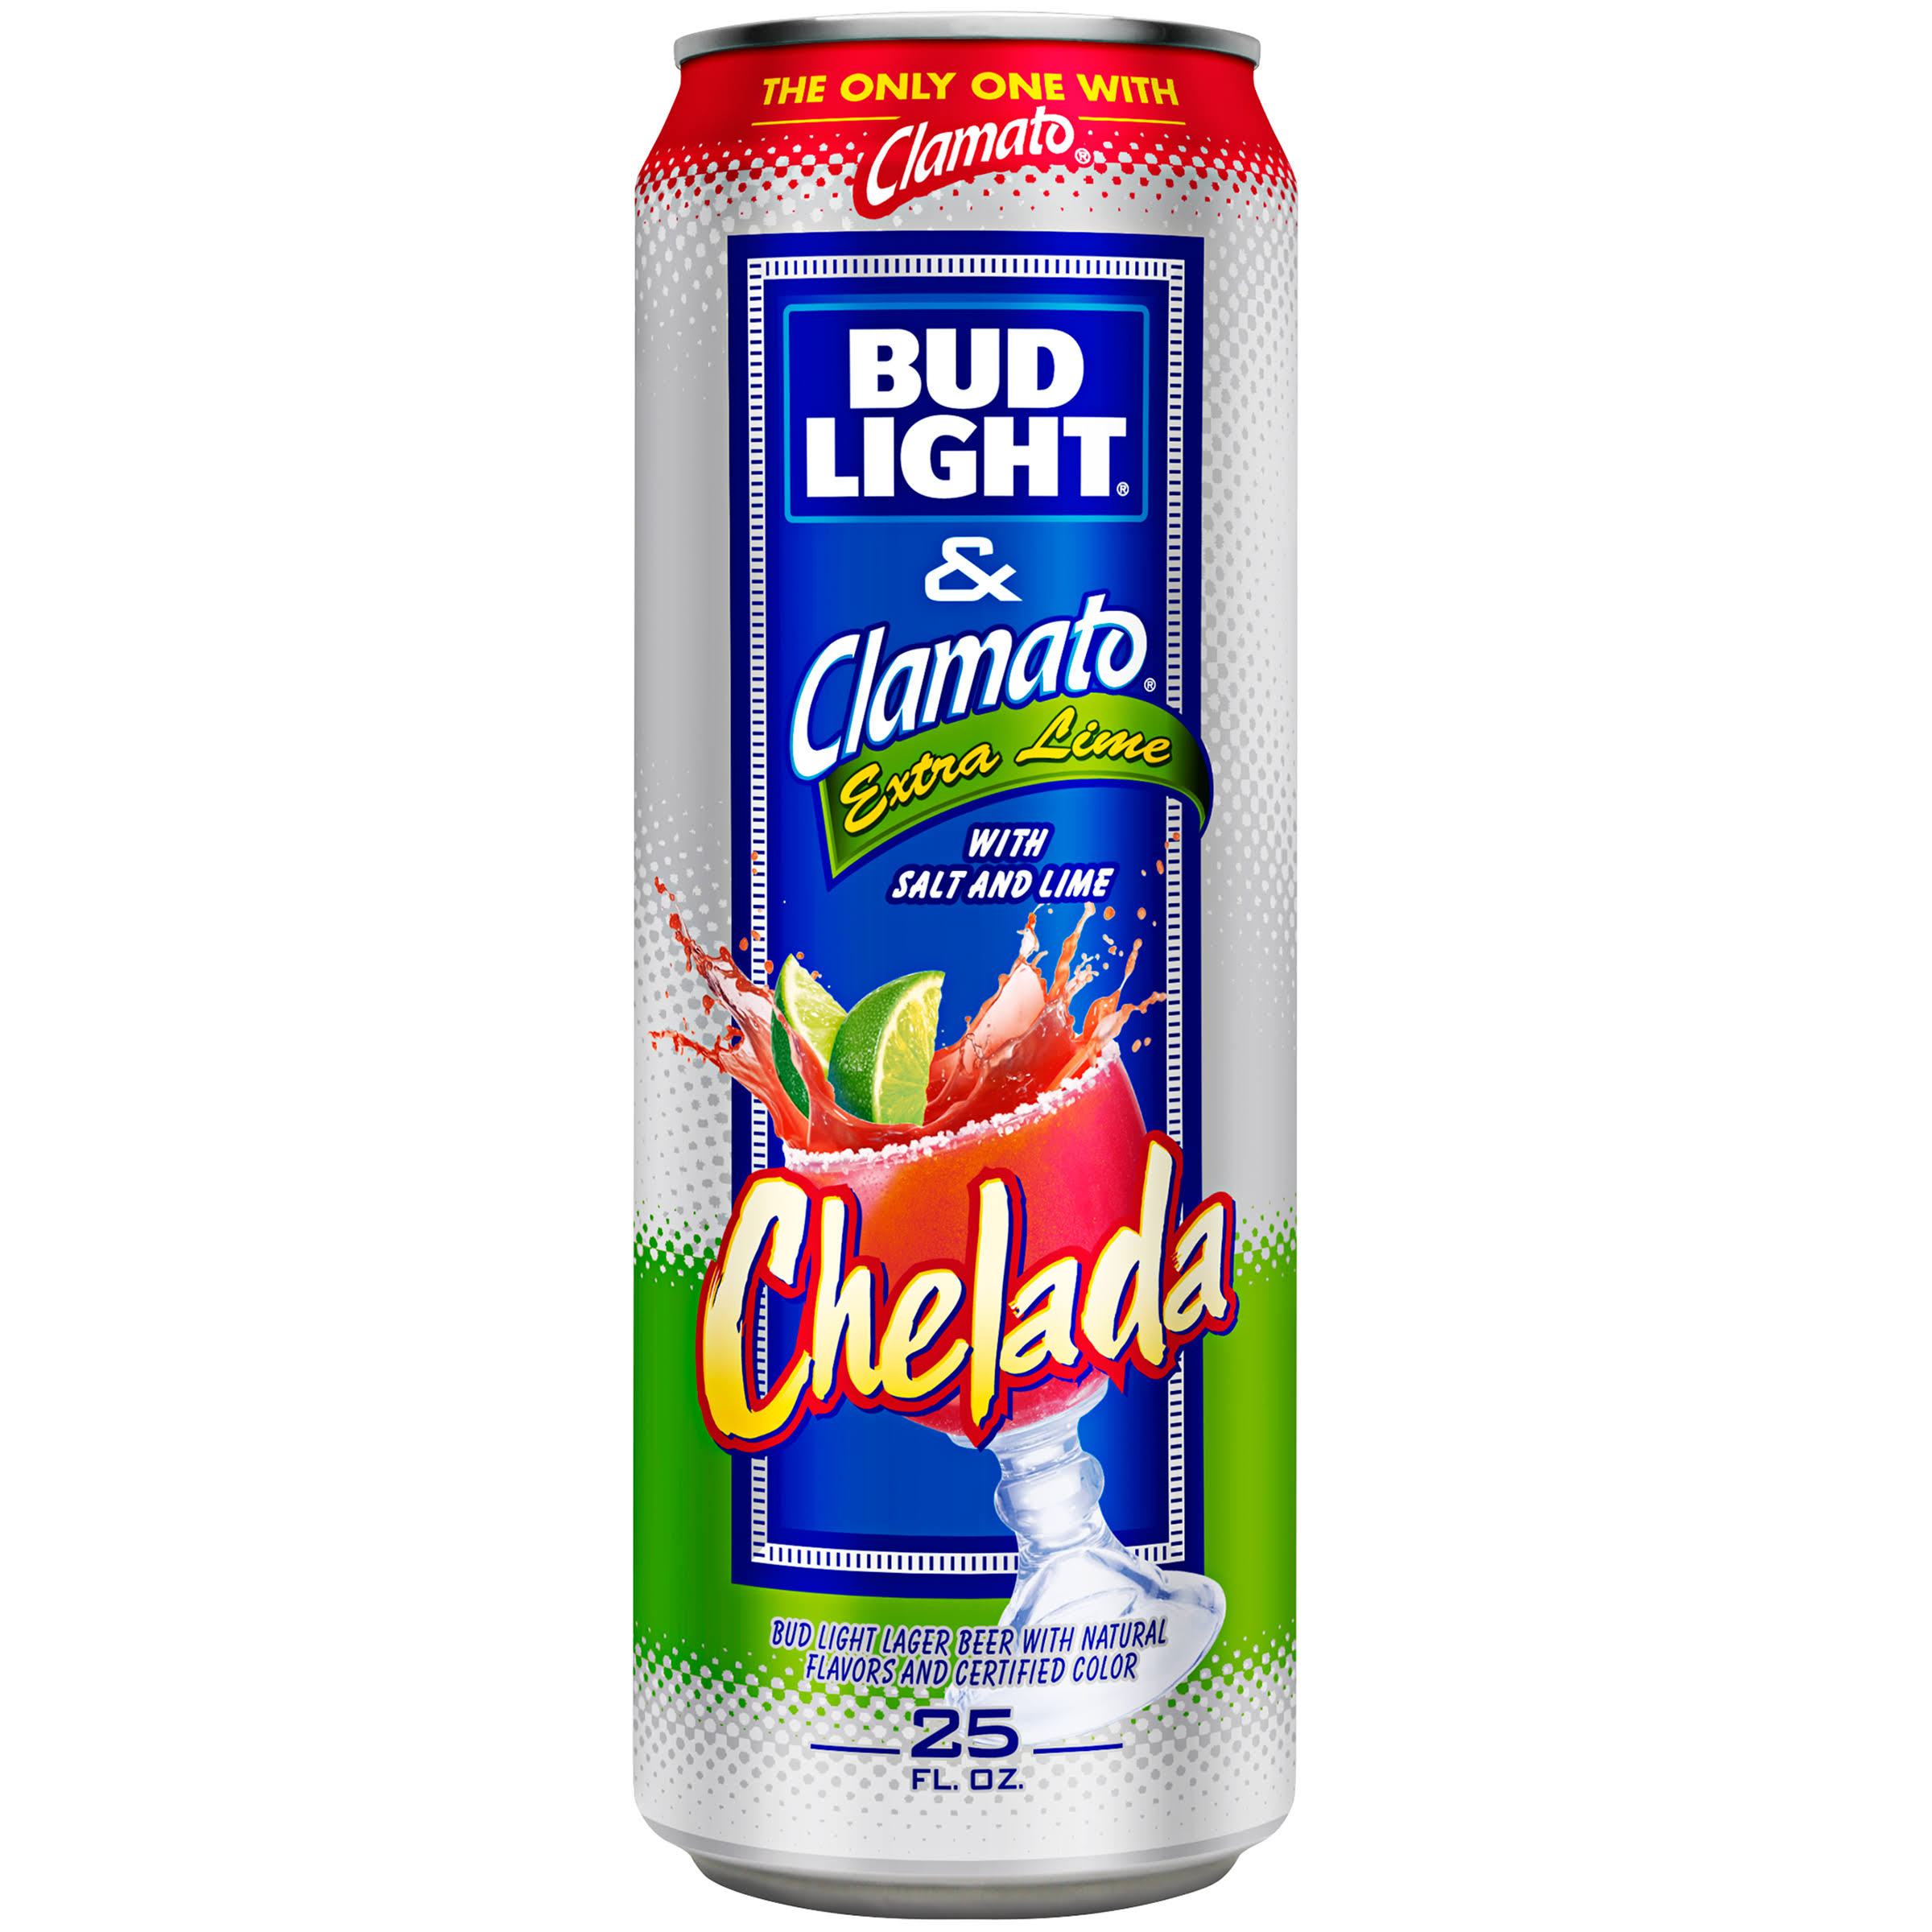 Bud Light Chelada Clamato Extra Lime Beer